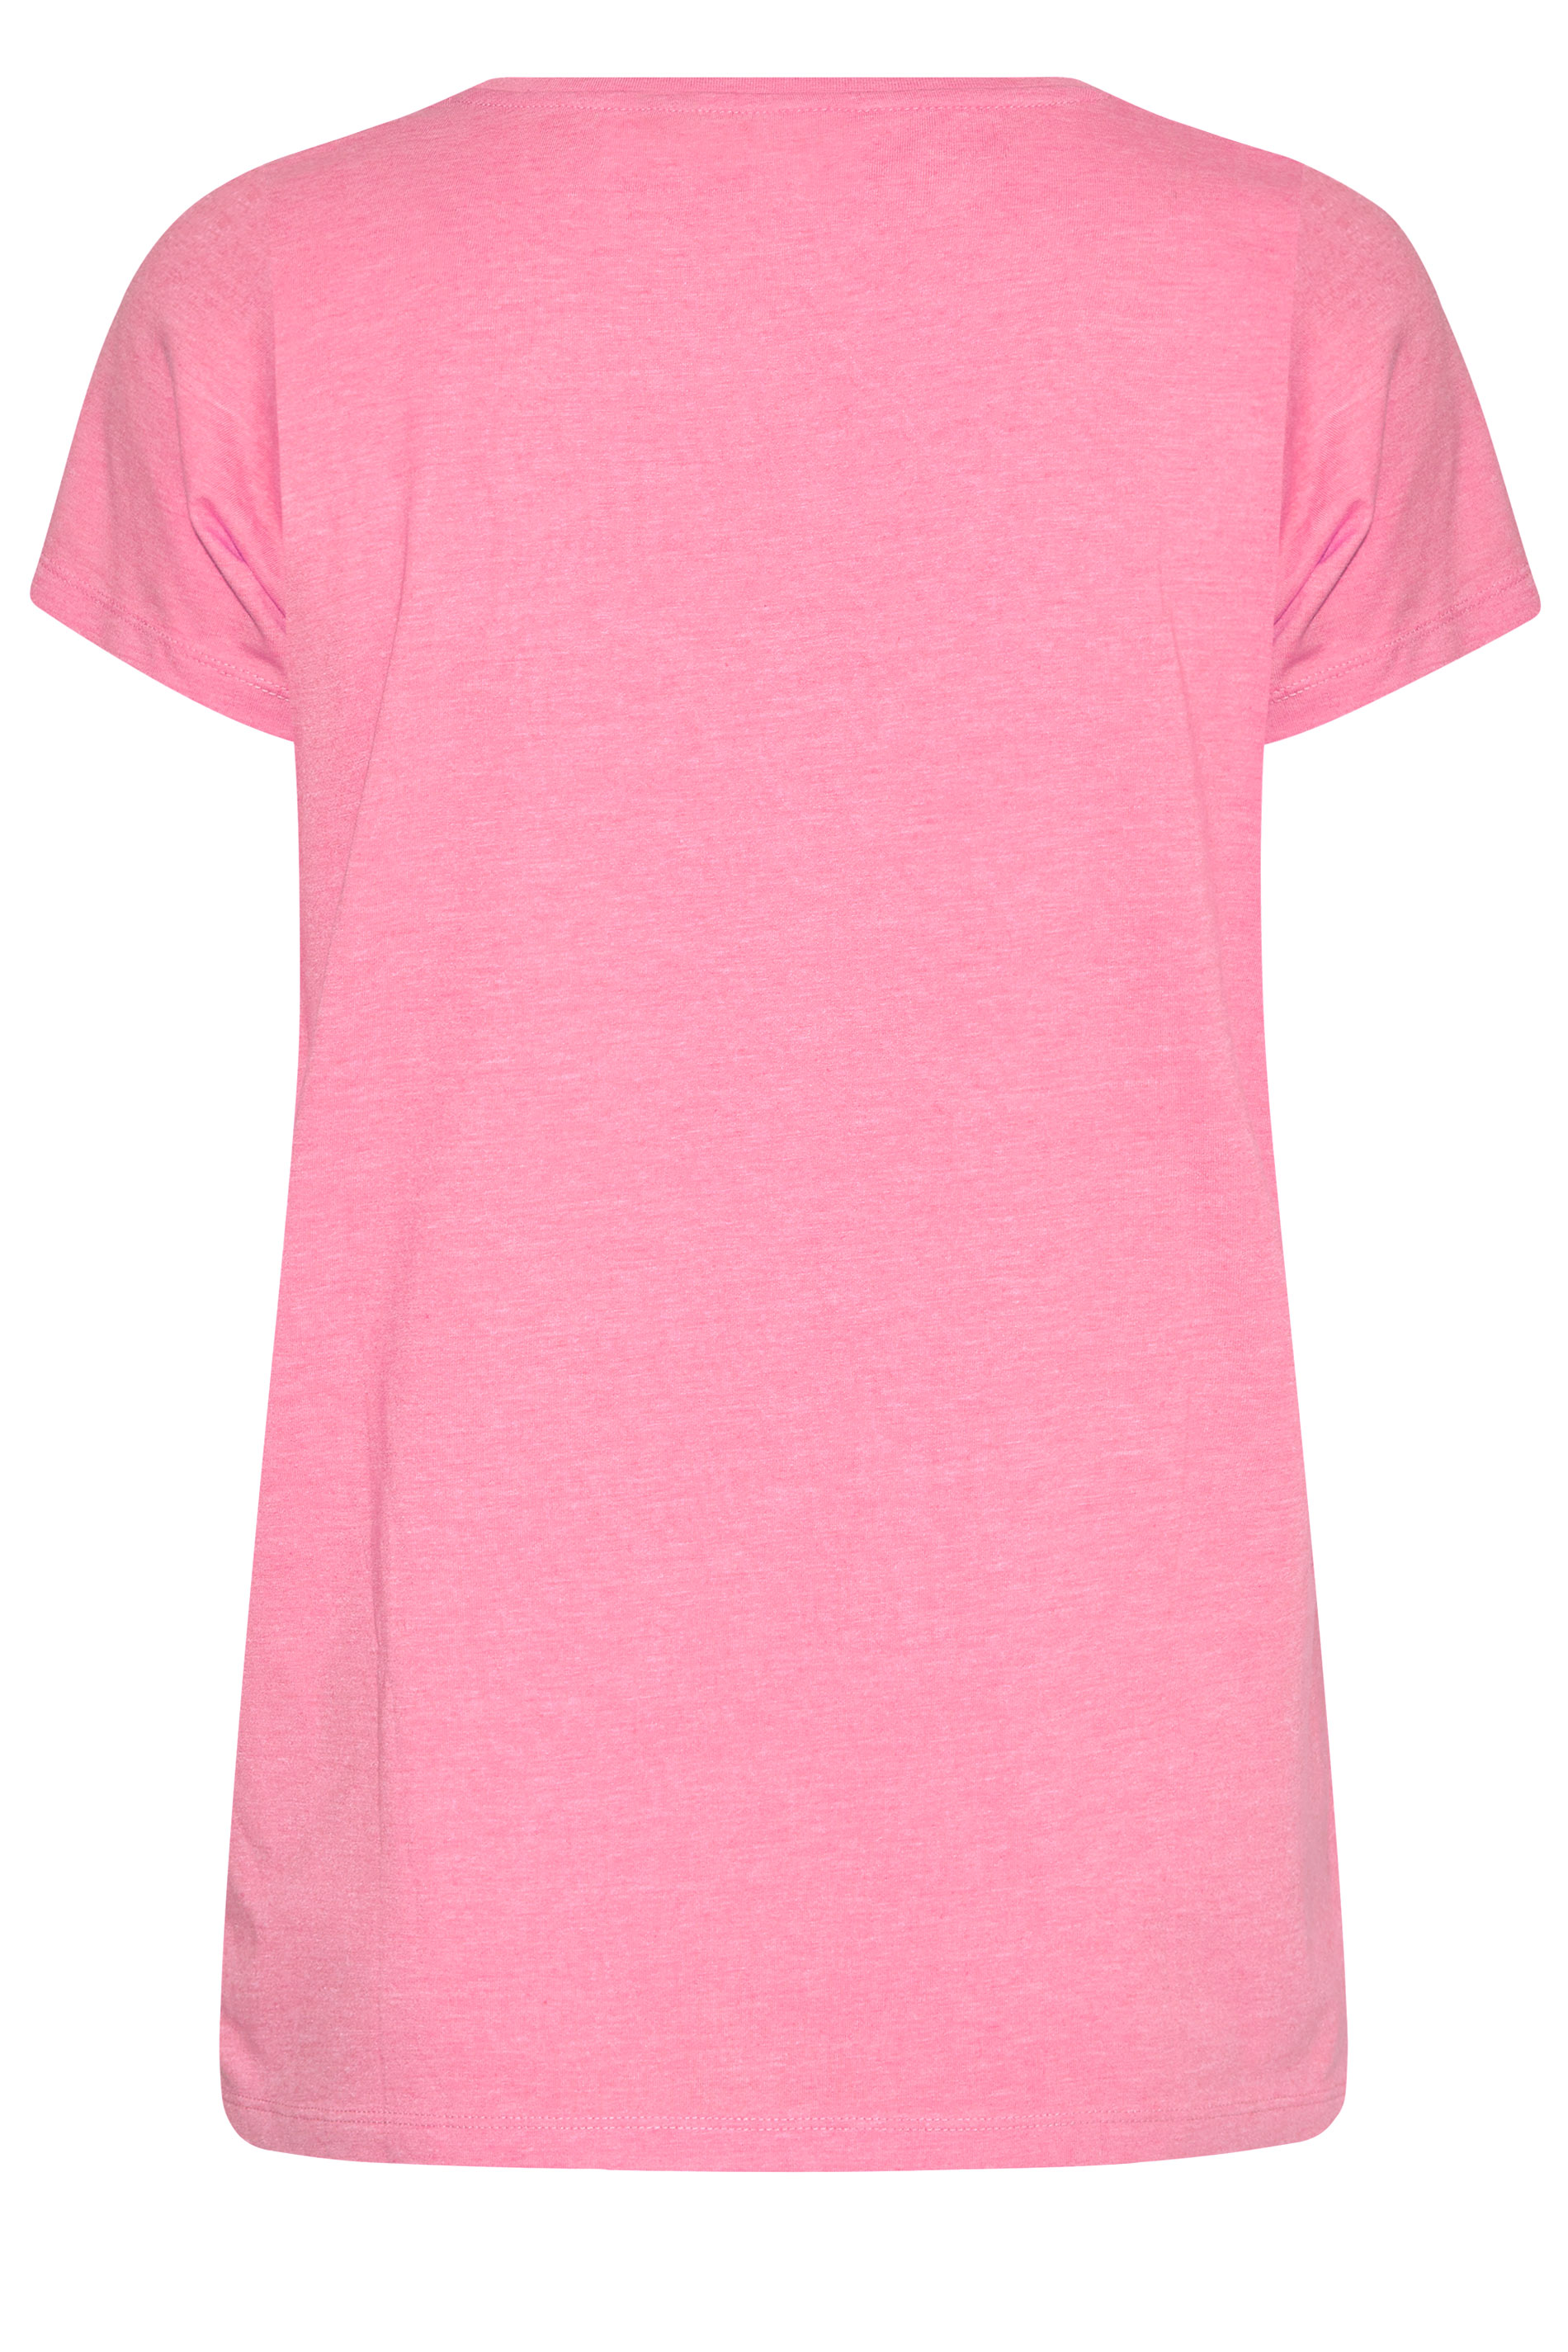 Grande taille  Tops Grande taille  T-Shirts Basiques & Débardeurs | T-Shirt Rose en Jersey Manches Courtes - NA89368